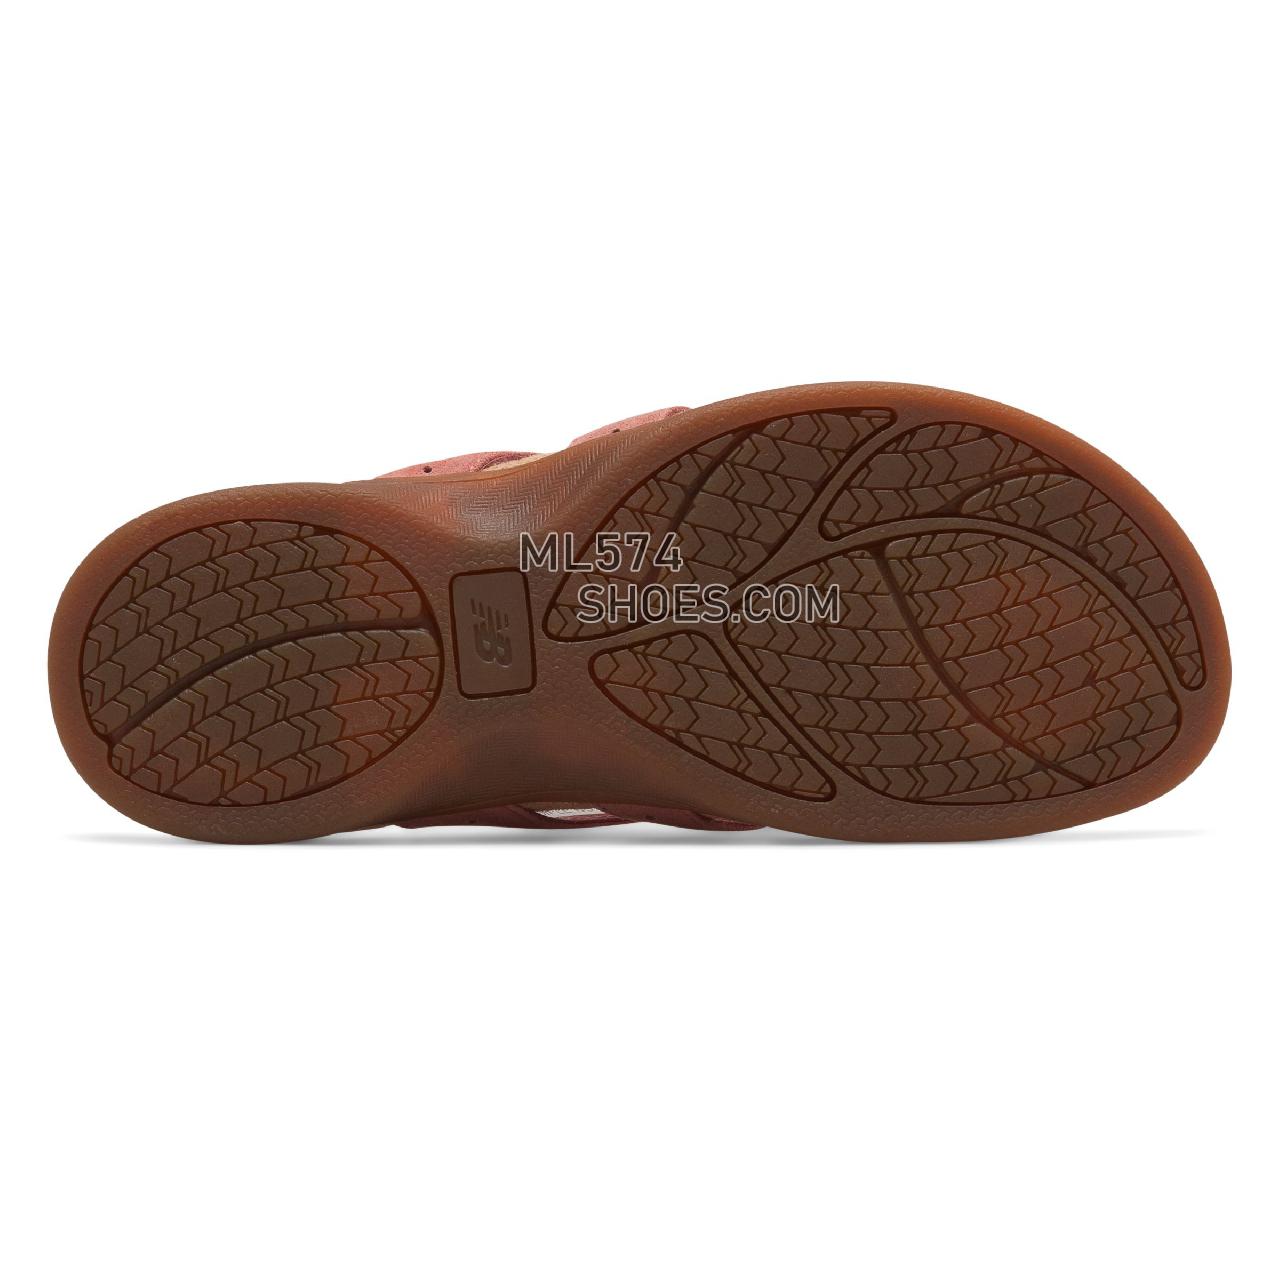 New Balance Shasta Thong - Women's 6100 - Sandals Brick - WR6100BRK